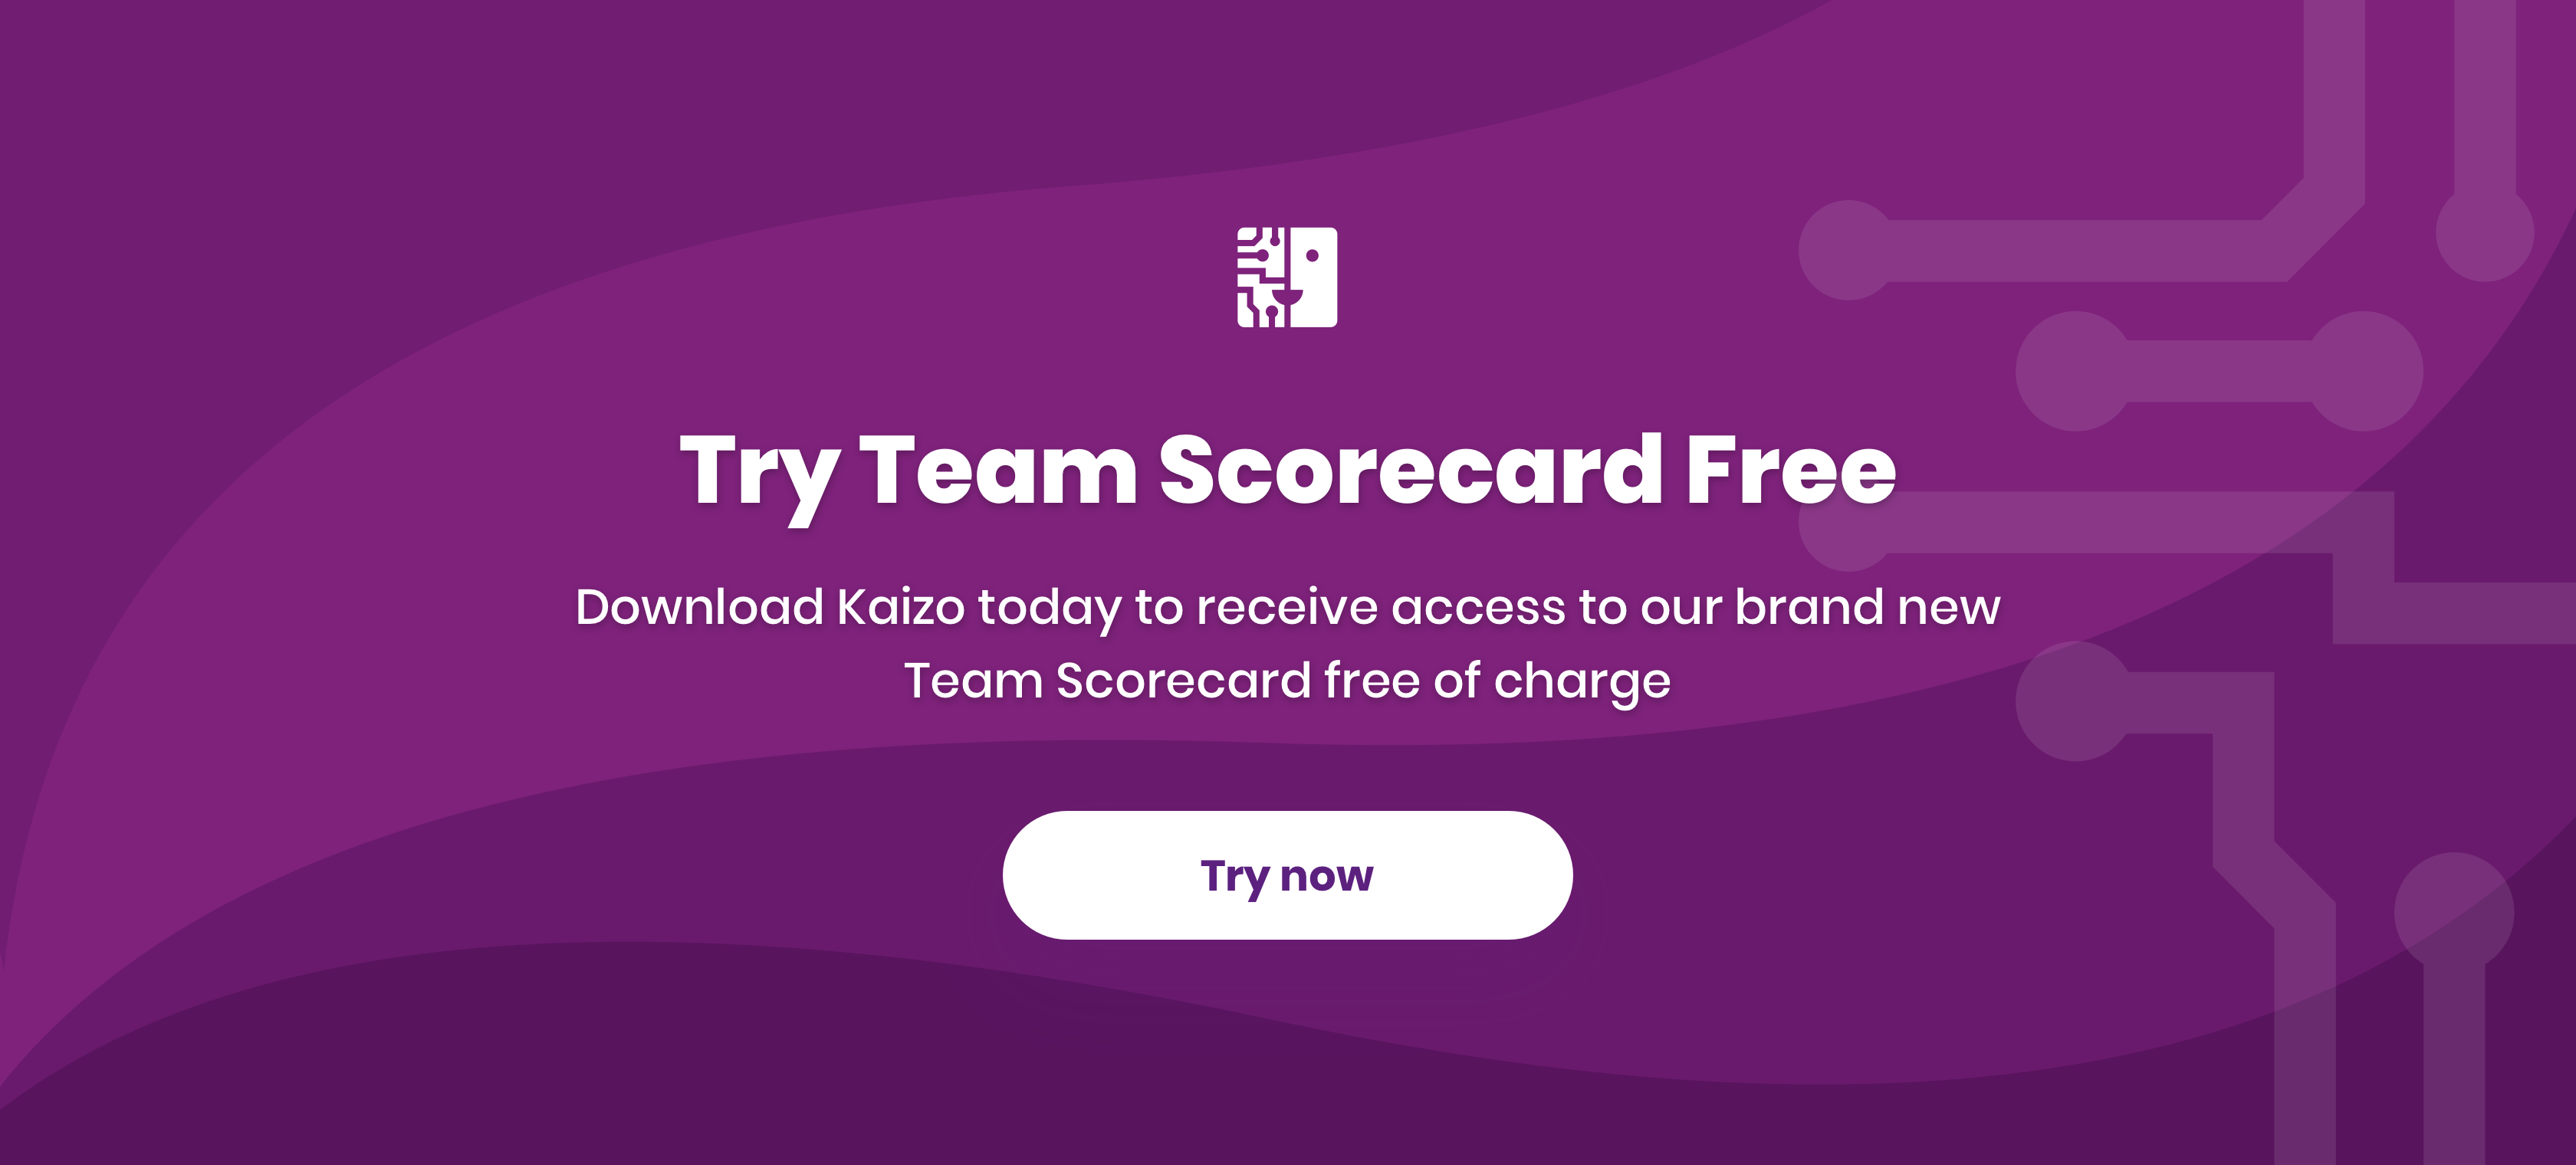 Try Team Scorecard free